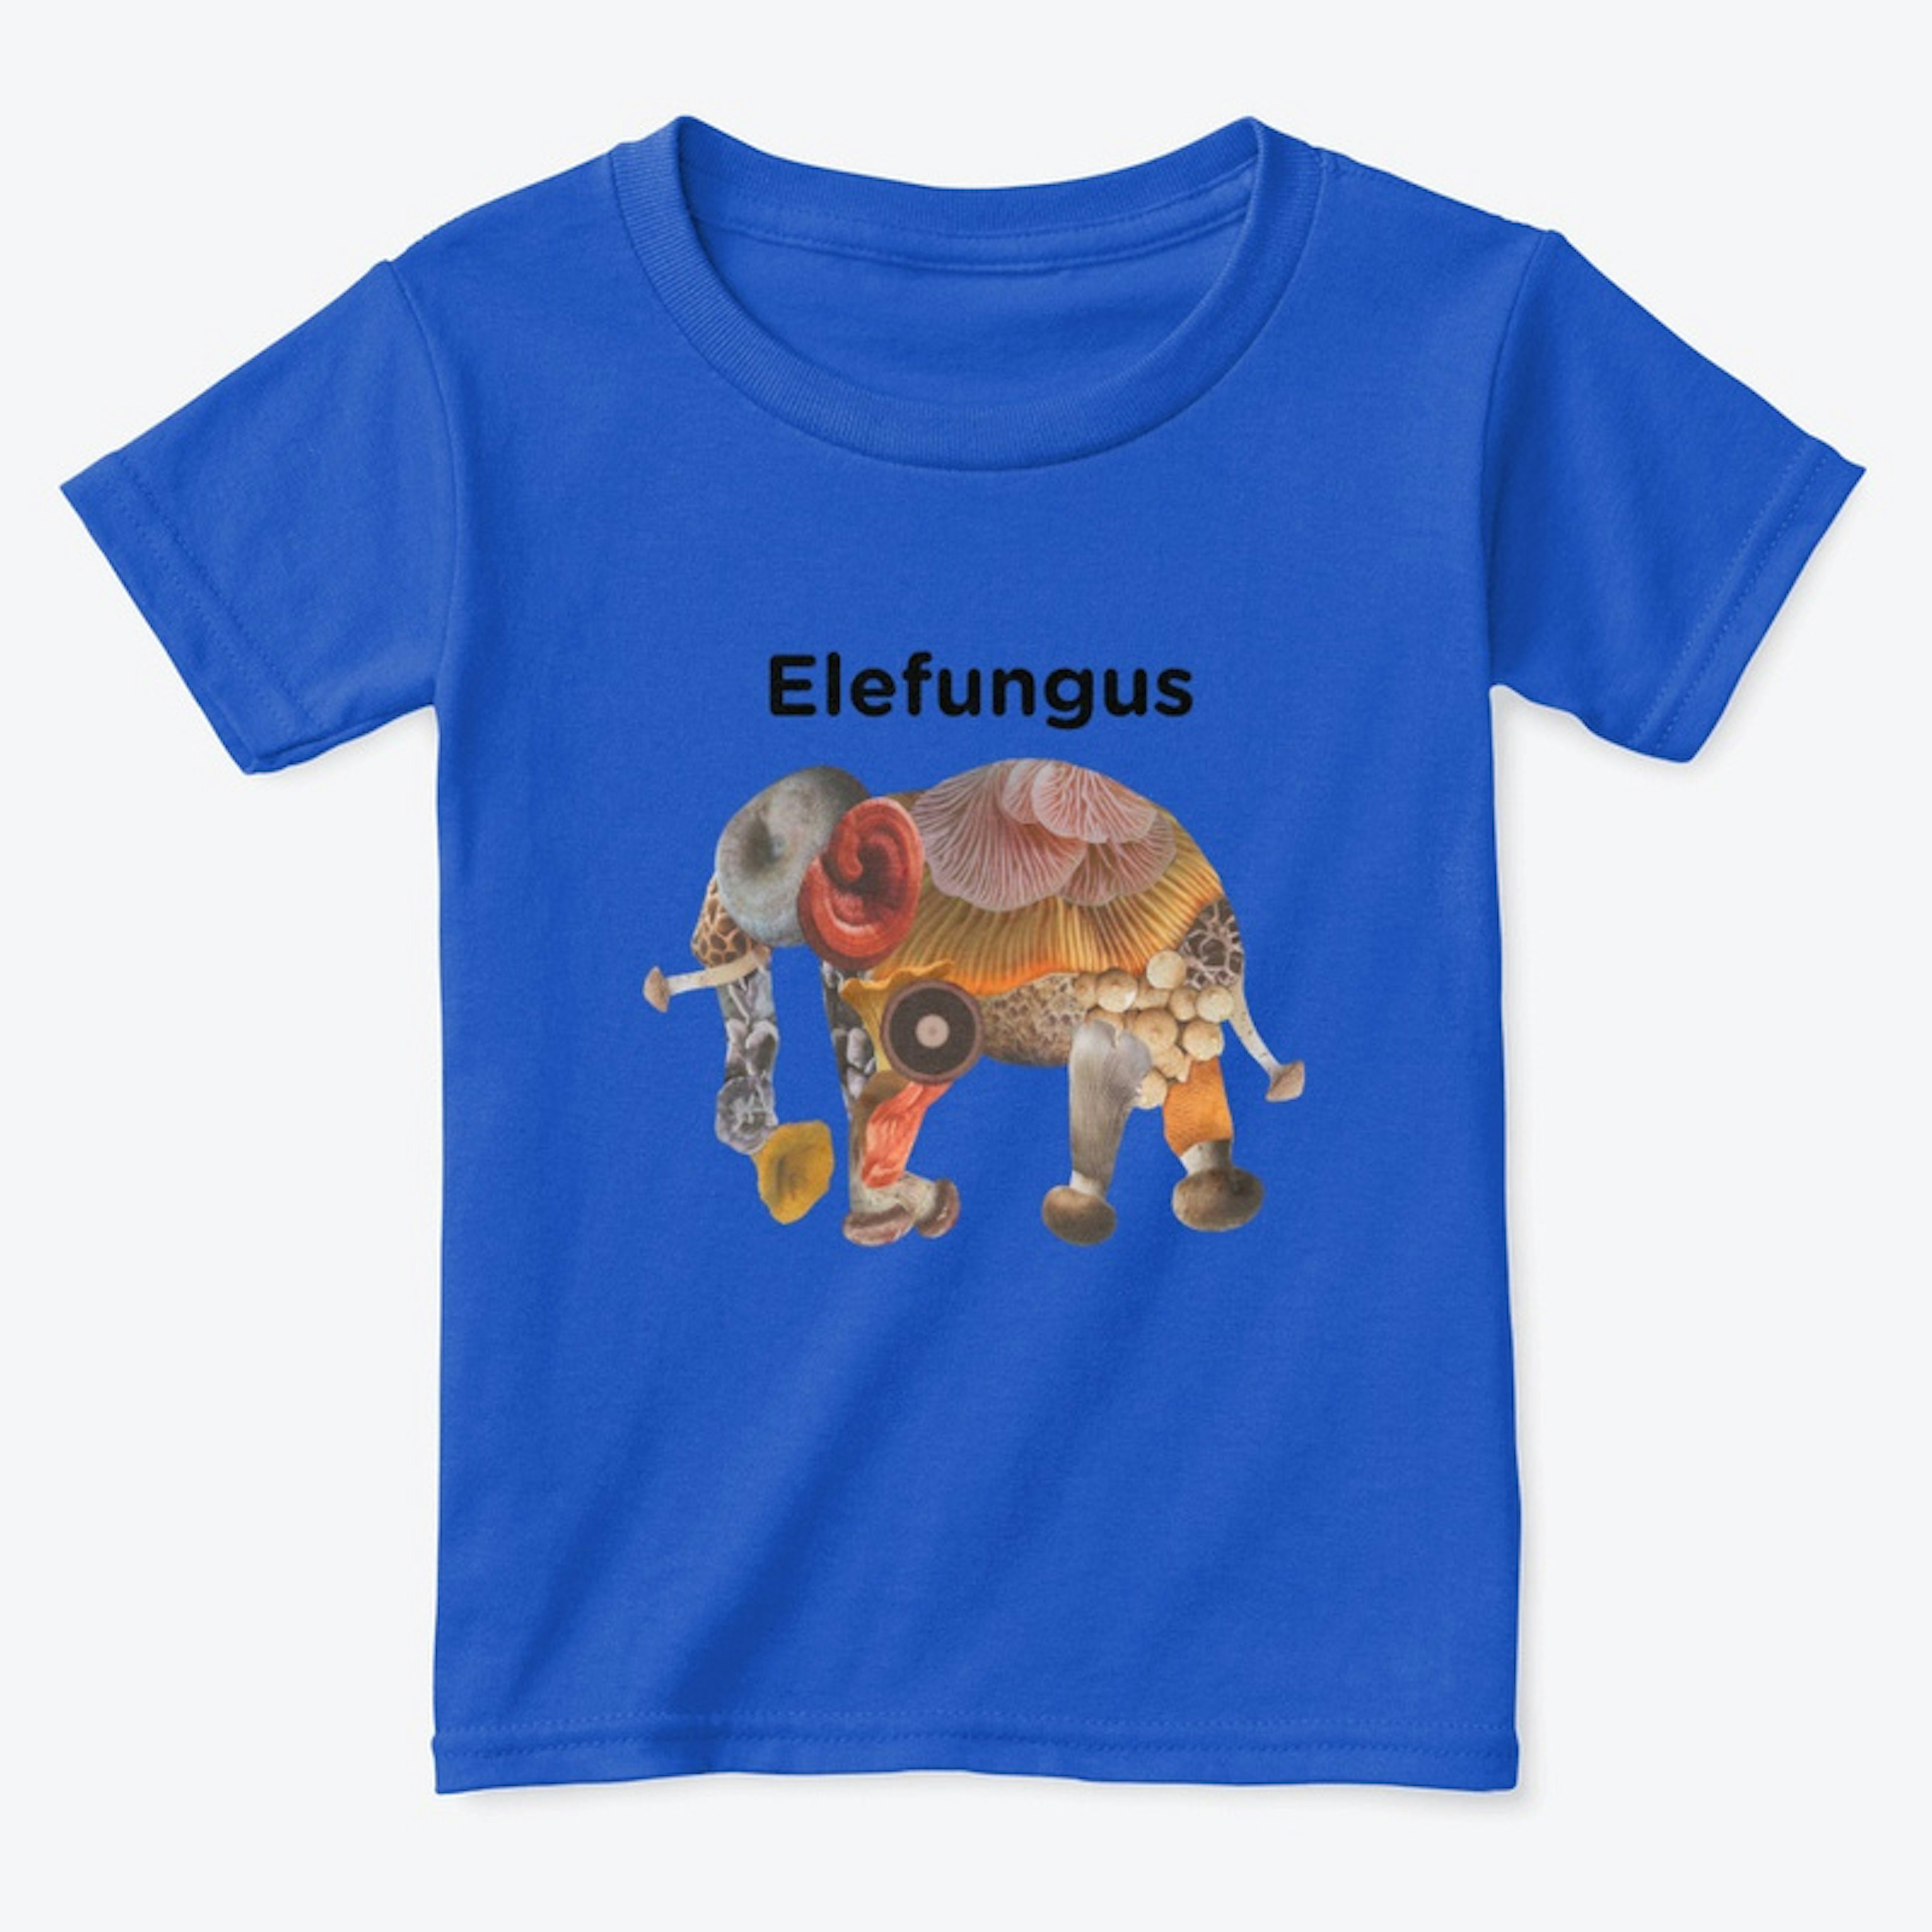 Elefungus